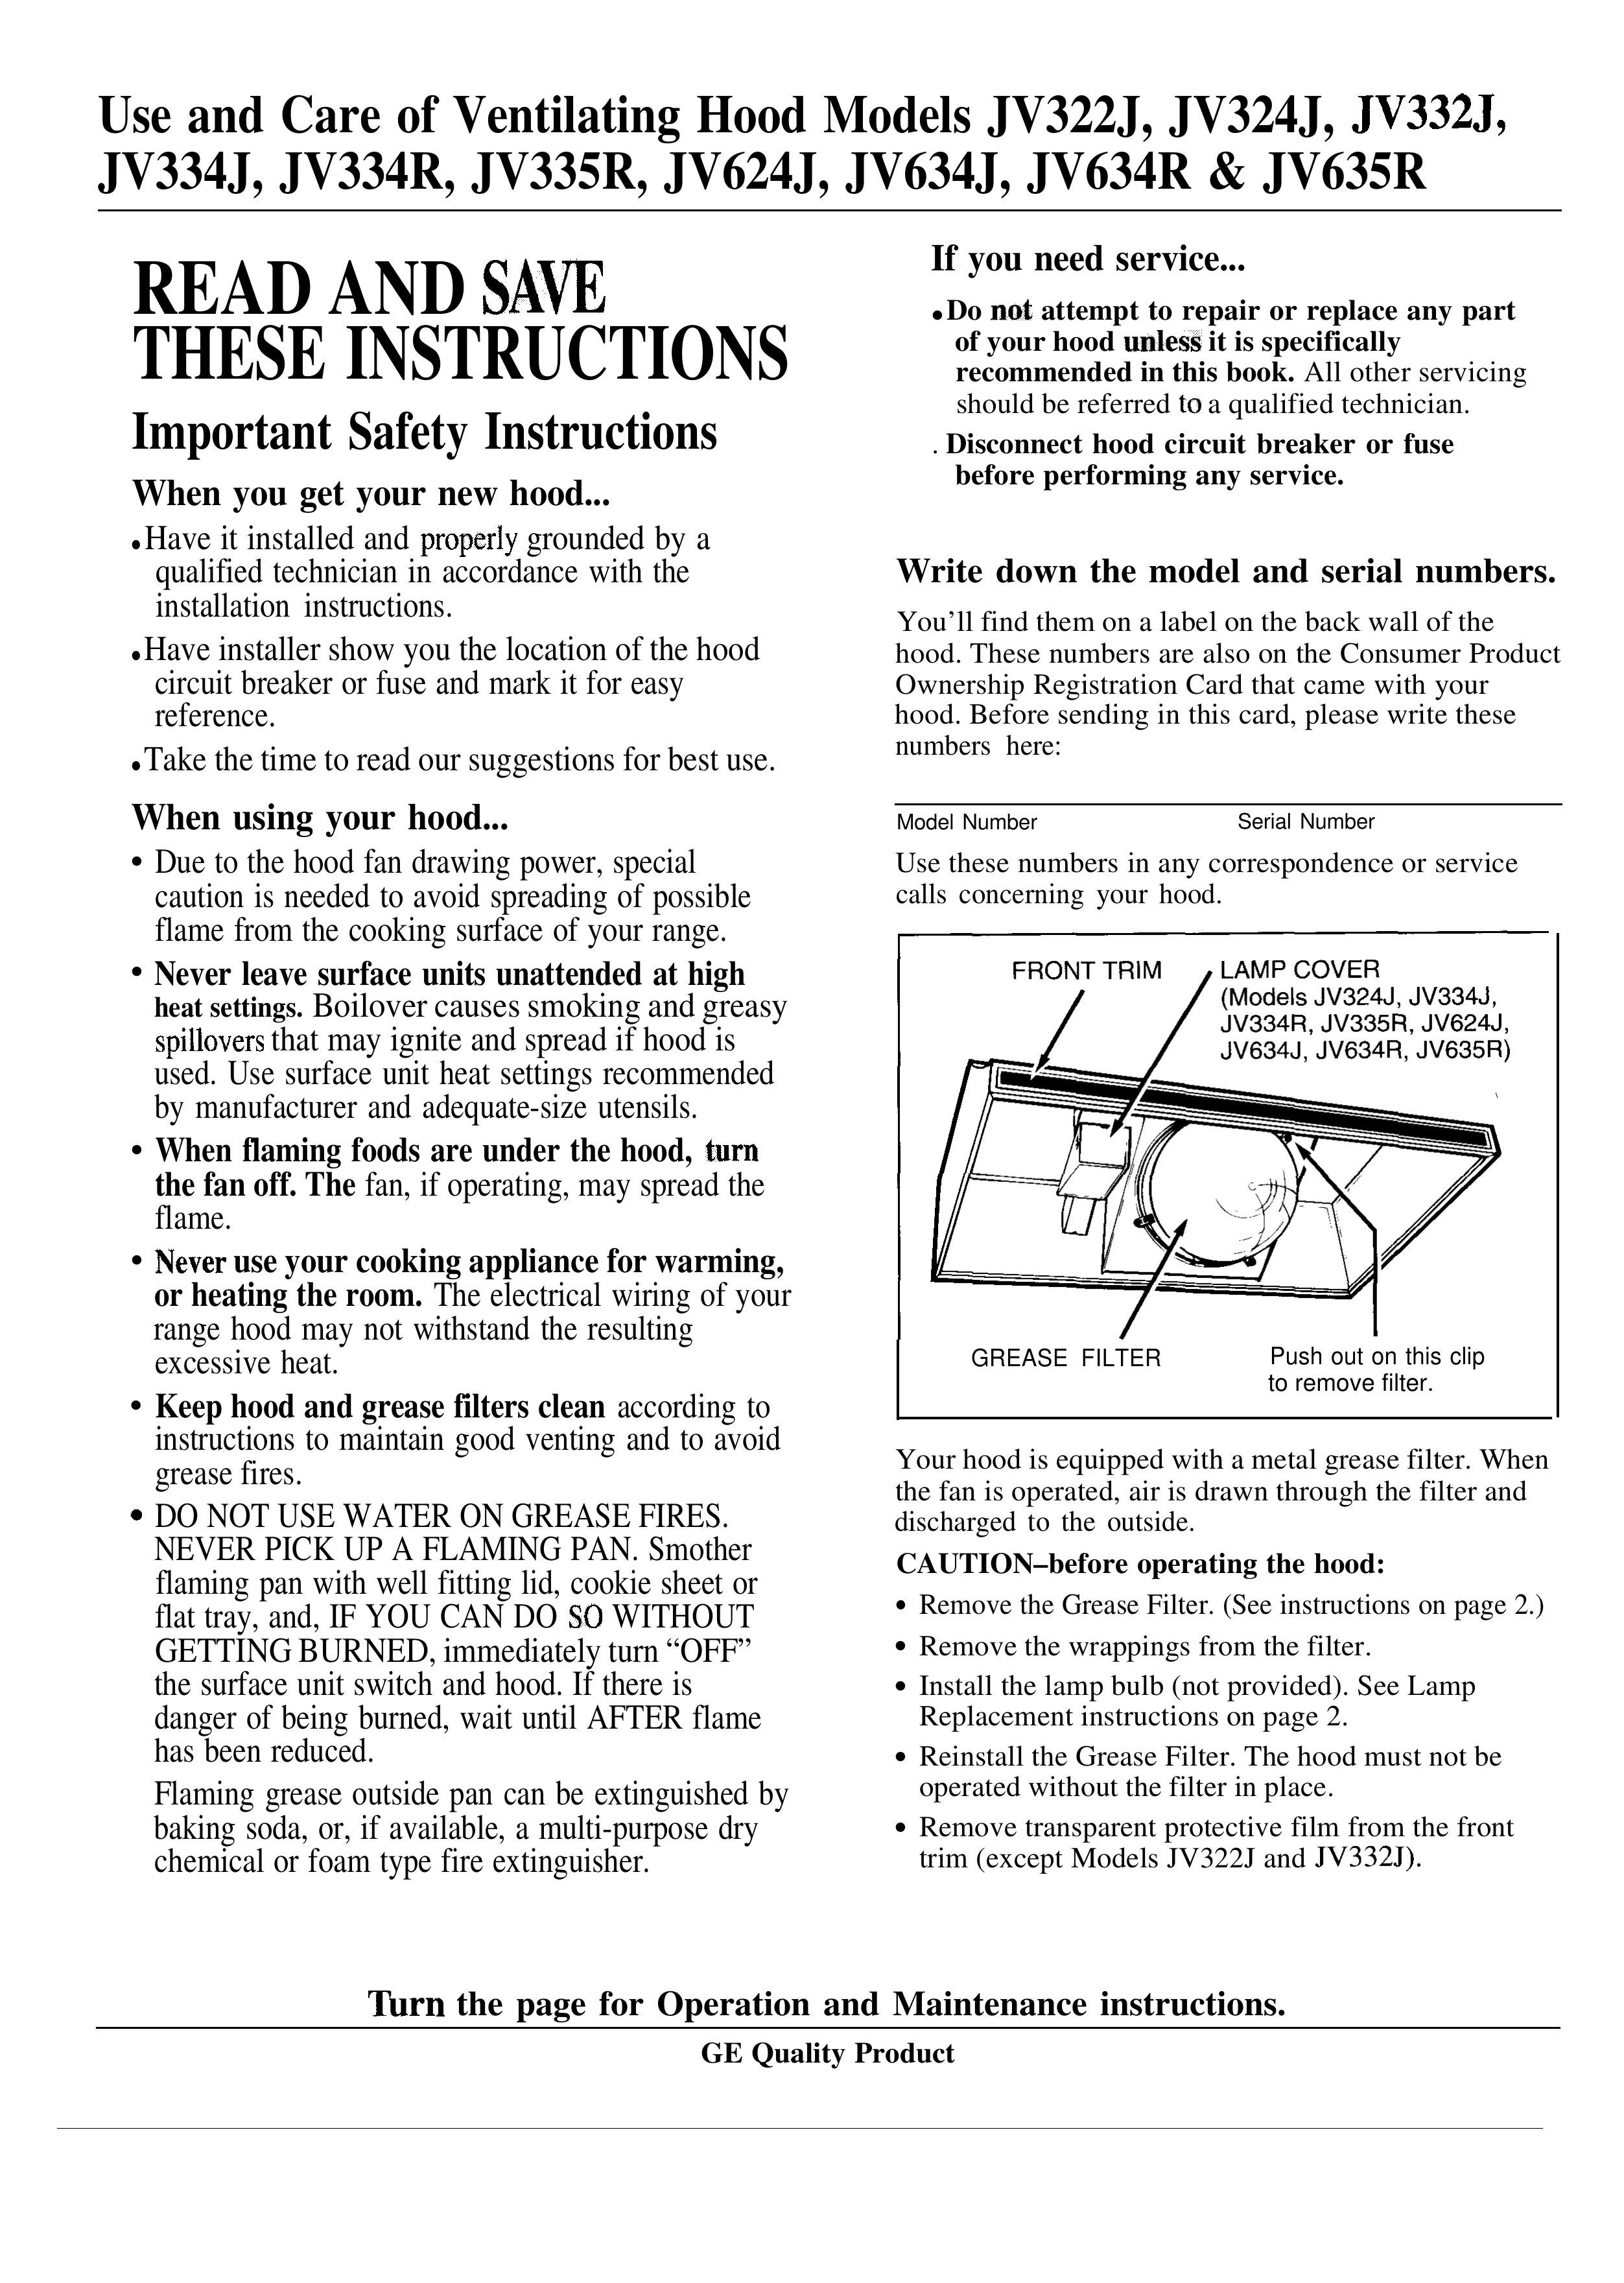 GE JV334R Ventilation Hood User Manual